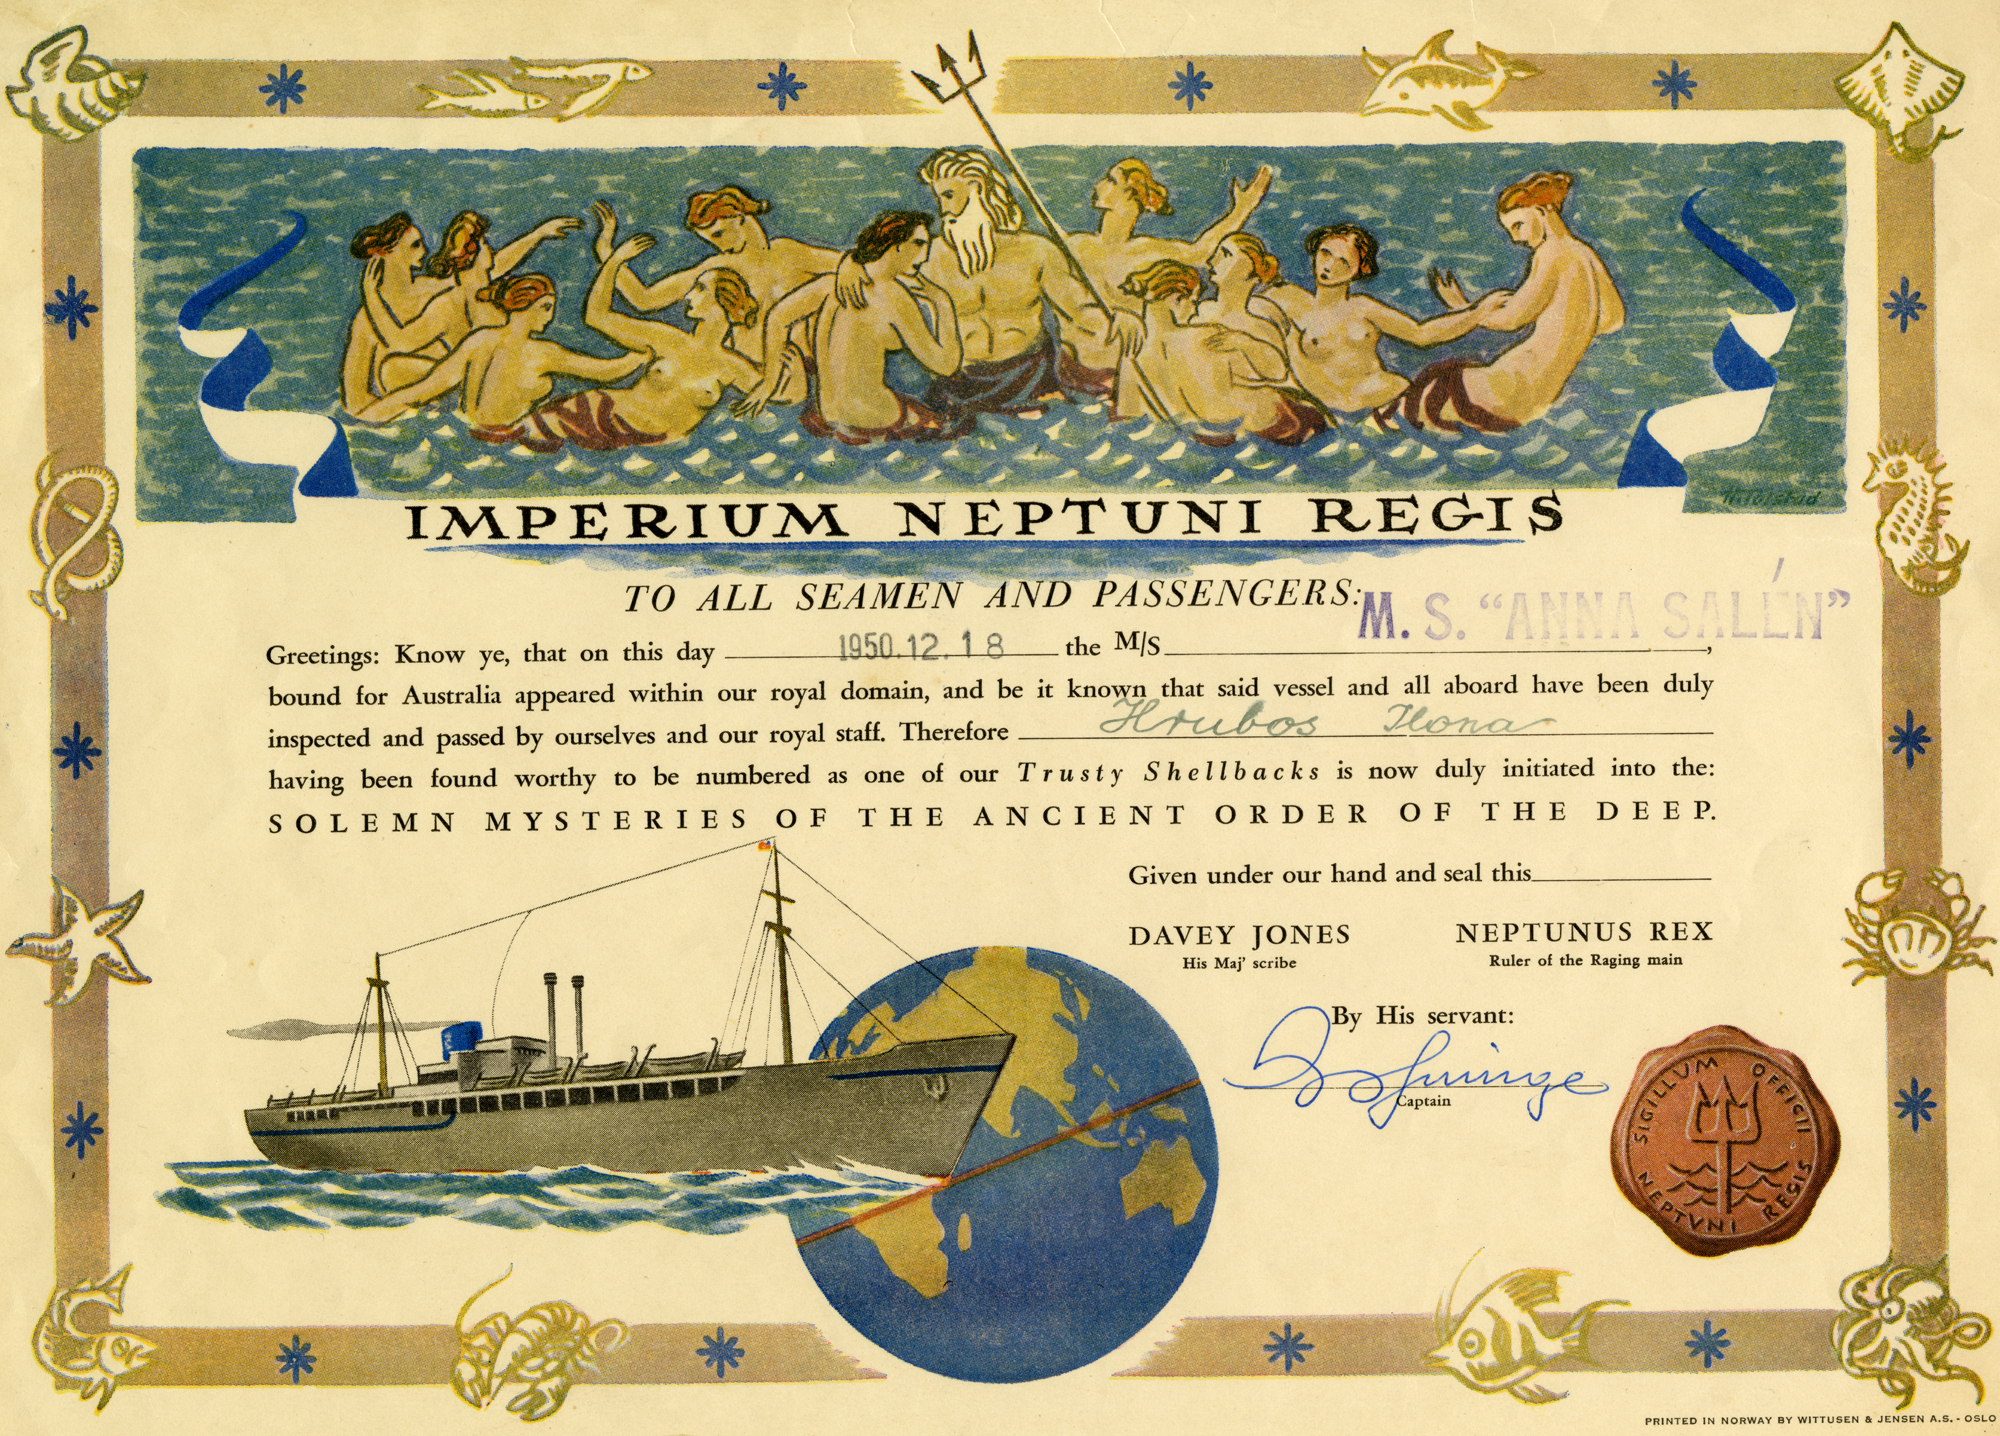 King Neptune's certificate